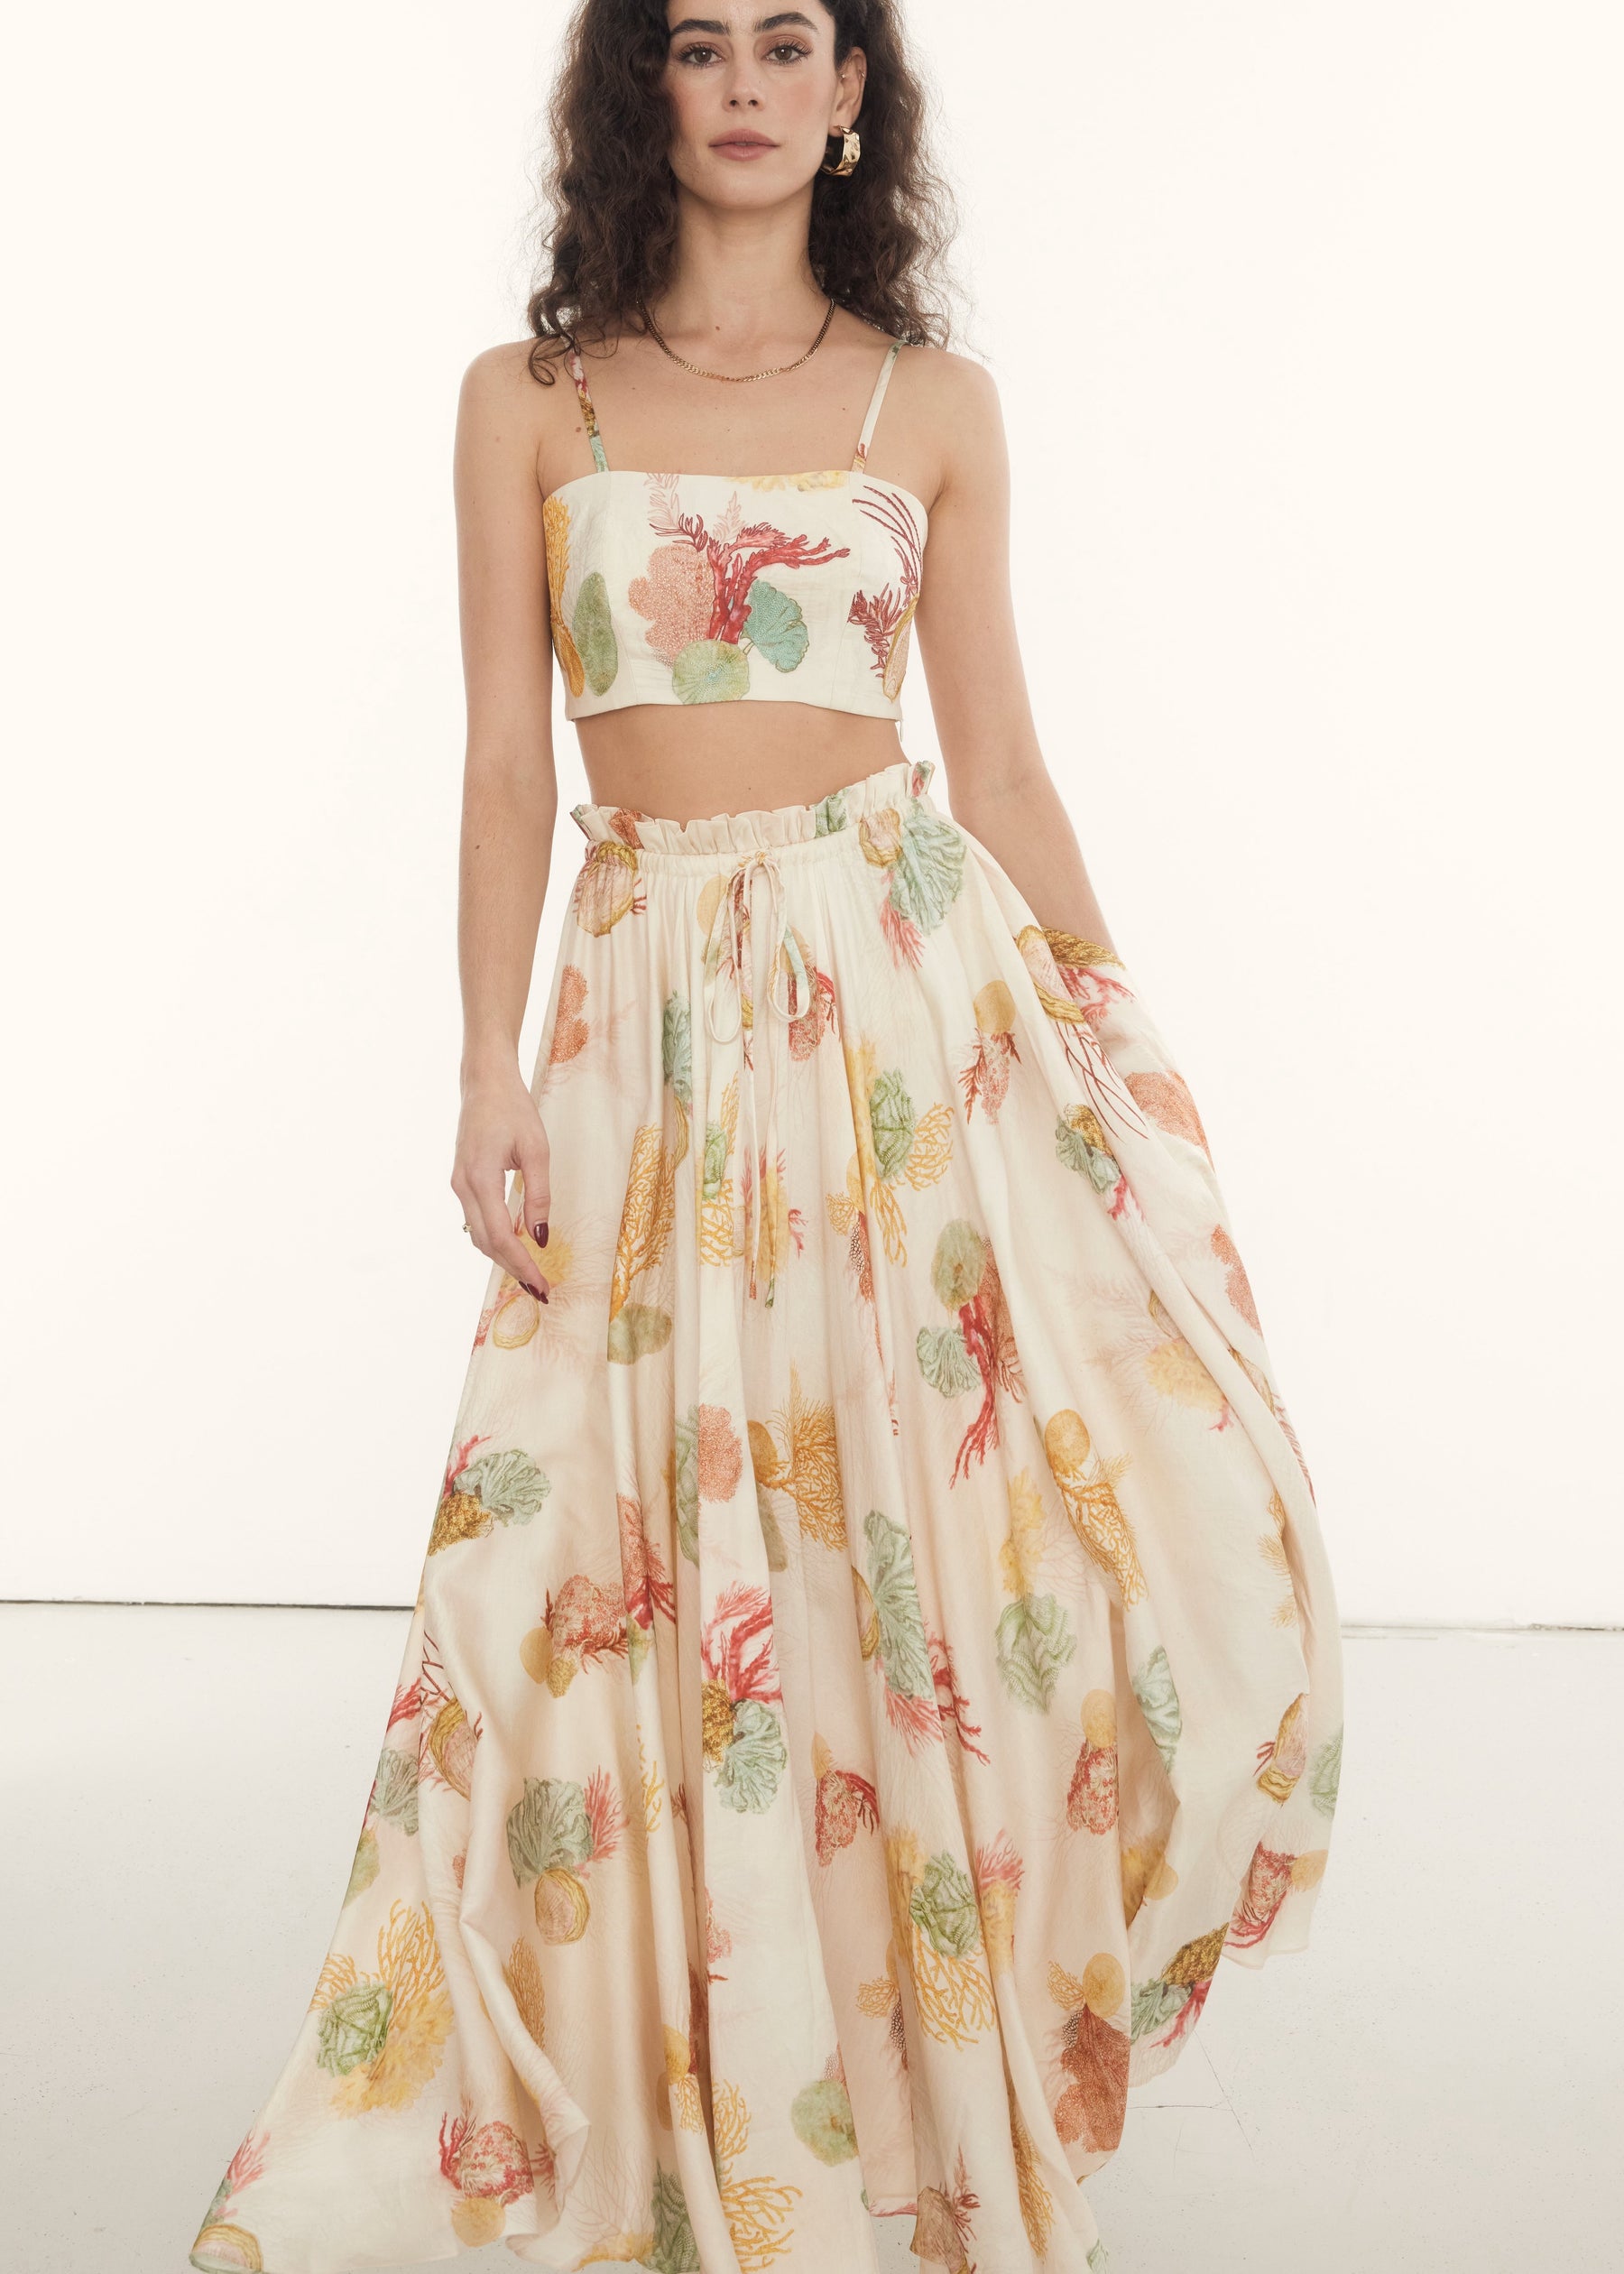 matching summer printed maxi skirt and crop top set